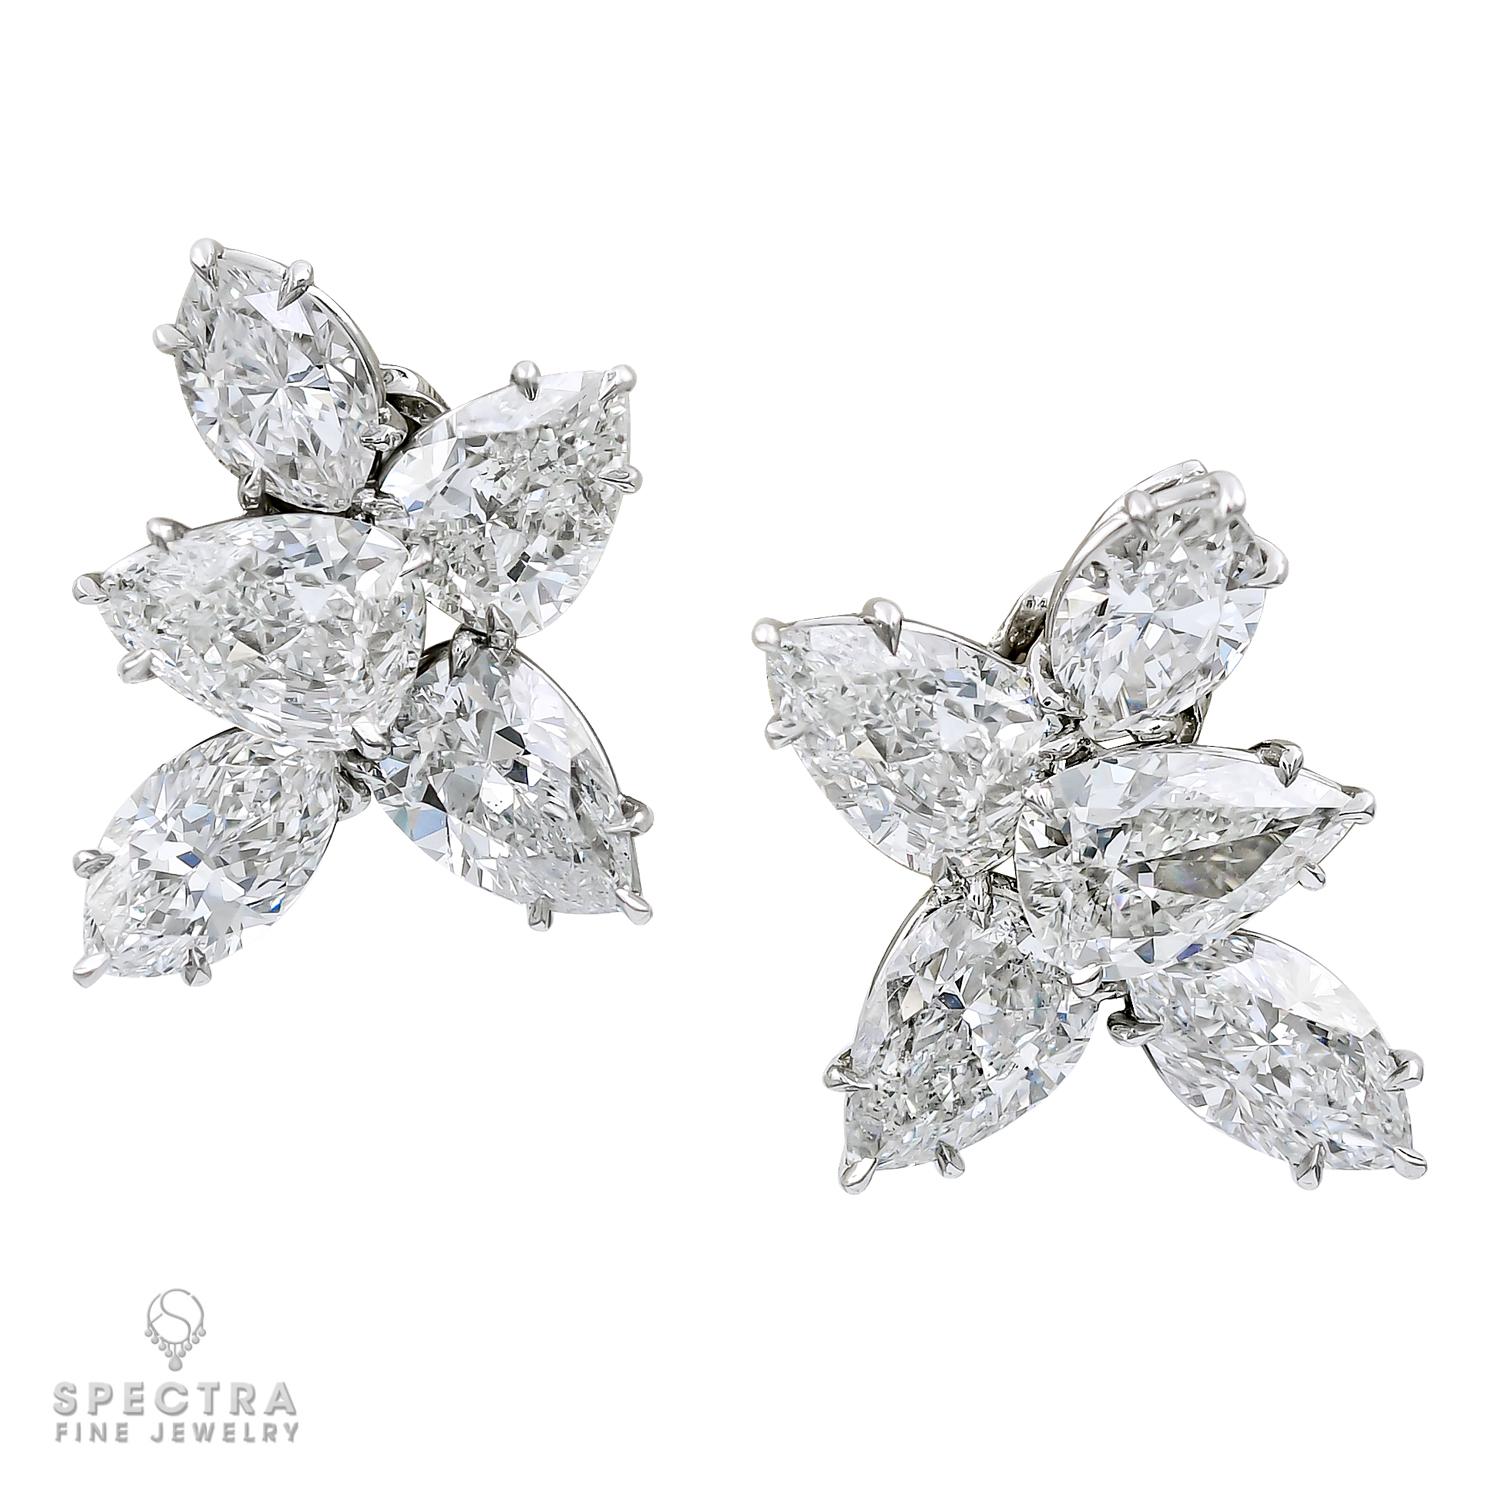 Mixed Cut Spectra Fine Jewelry Marquis & Pear-Shape Diamond Cluster Earrings For Sale